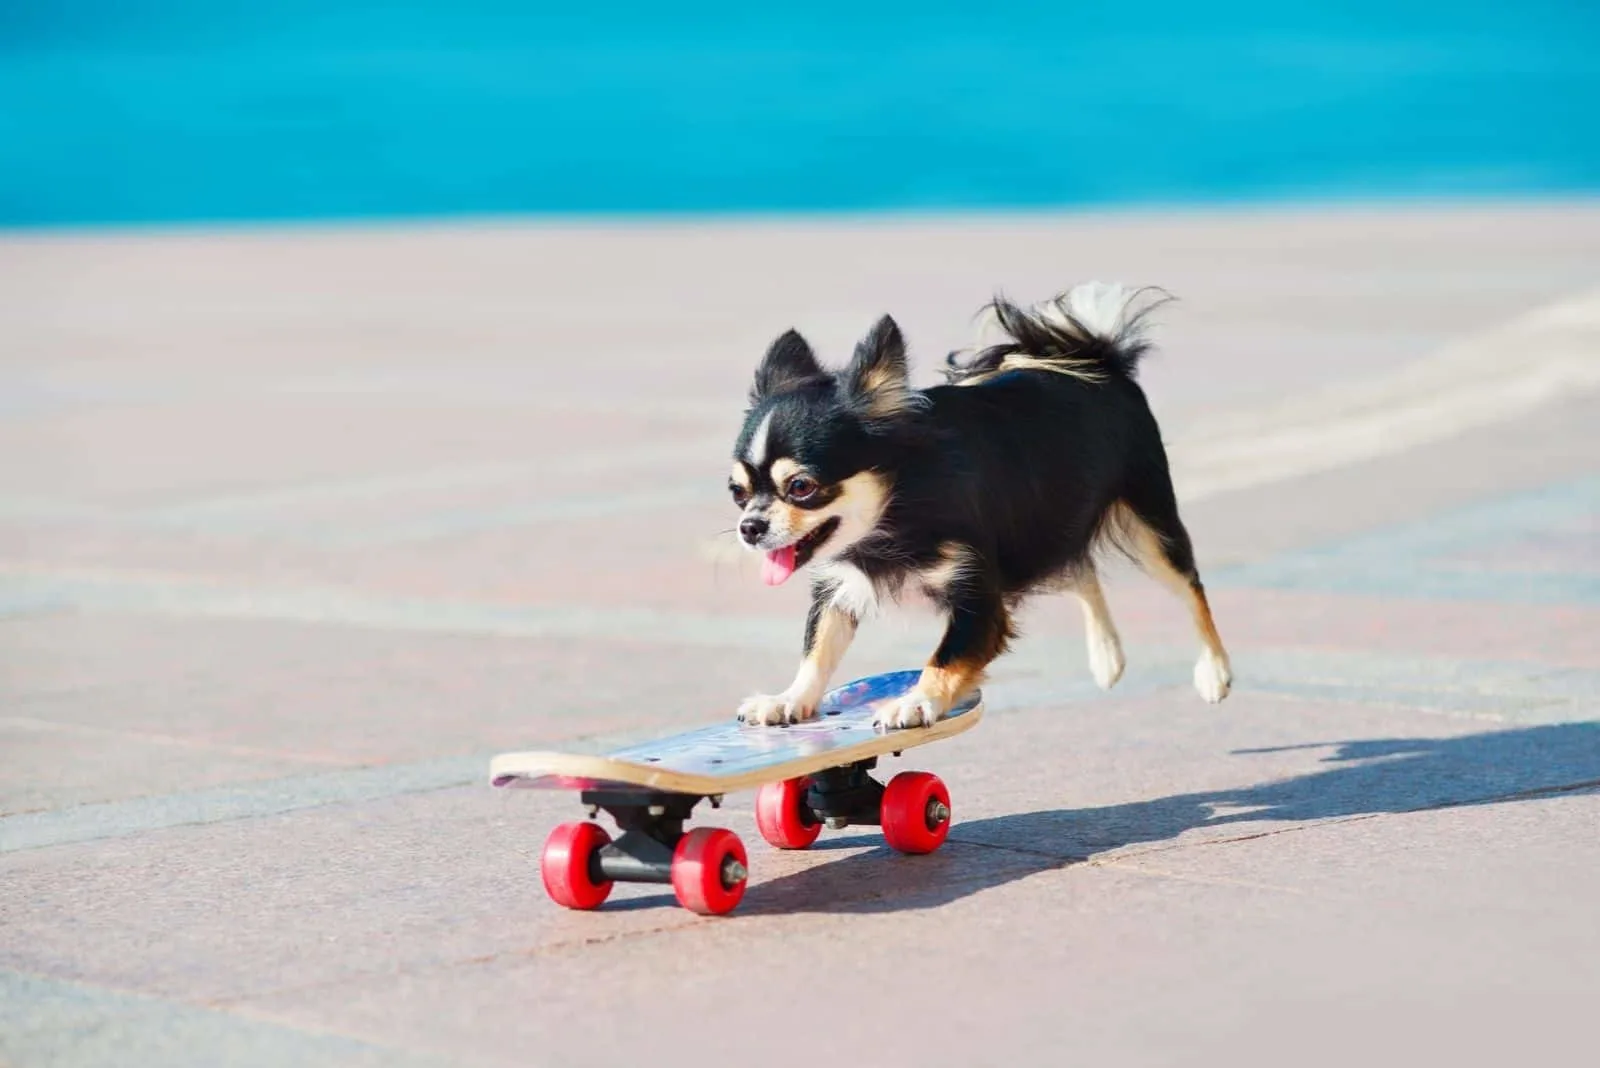 chihuahua dog skating on skates in the street